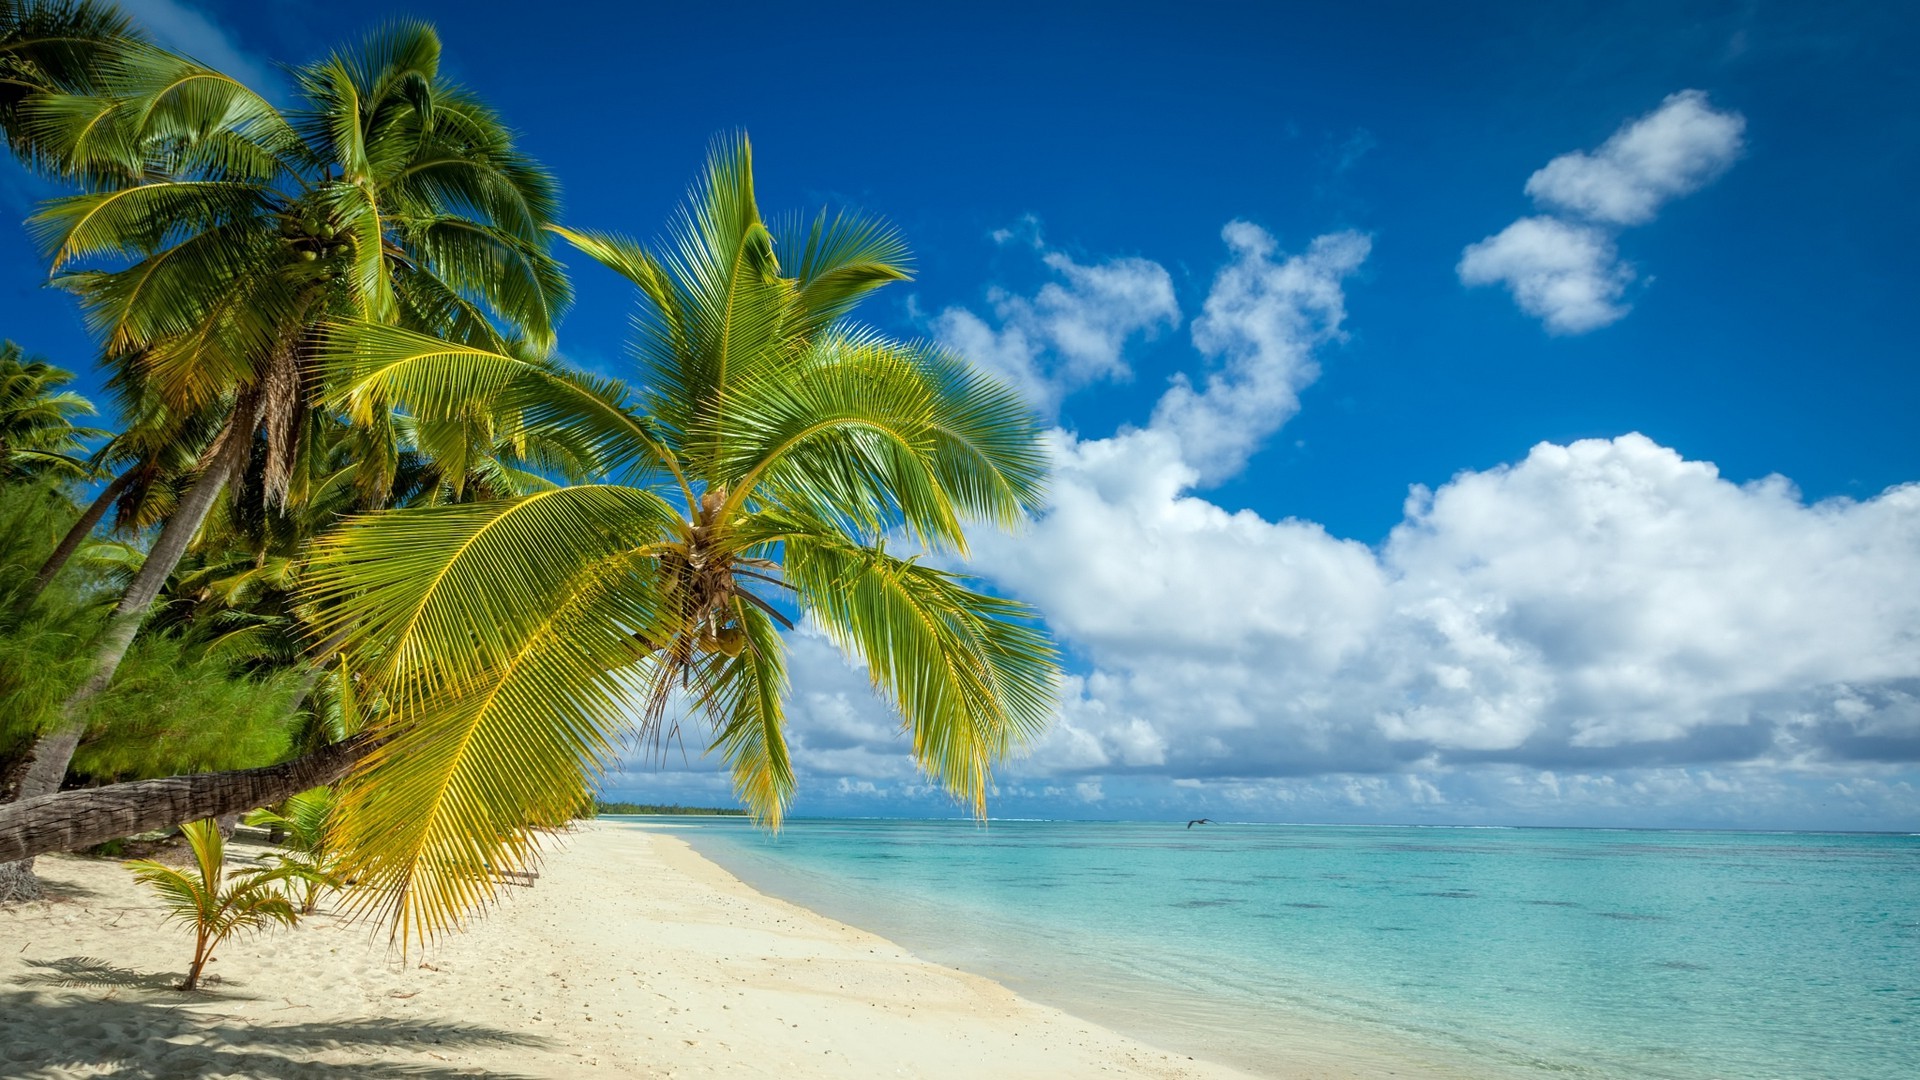 Nature Landscape Tropical Island Beach Palm Trees White Sand Sea Summer Clouds